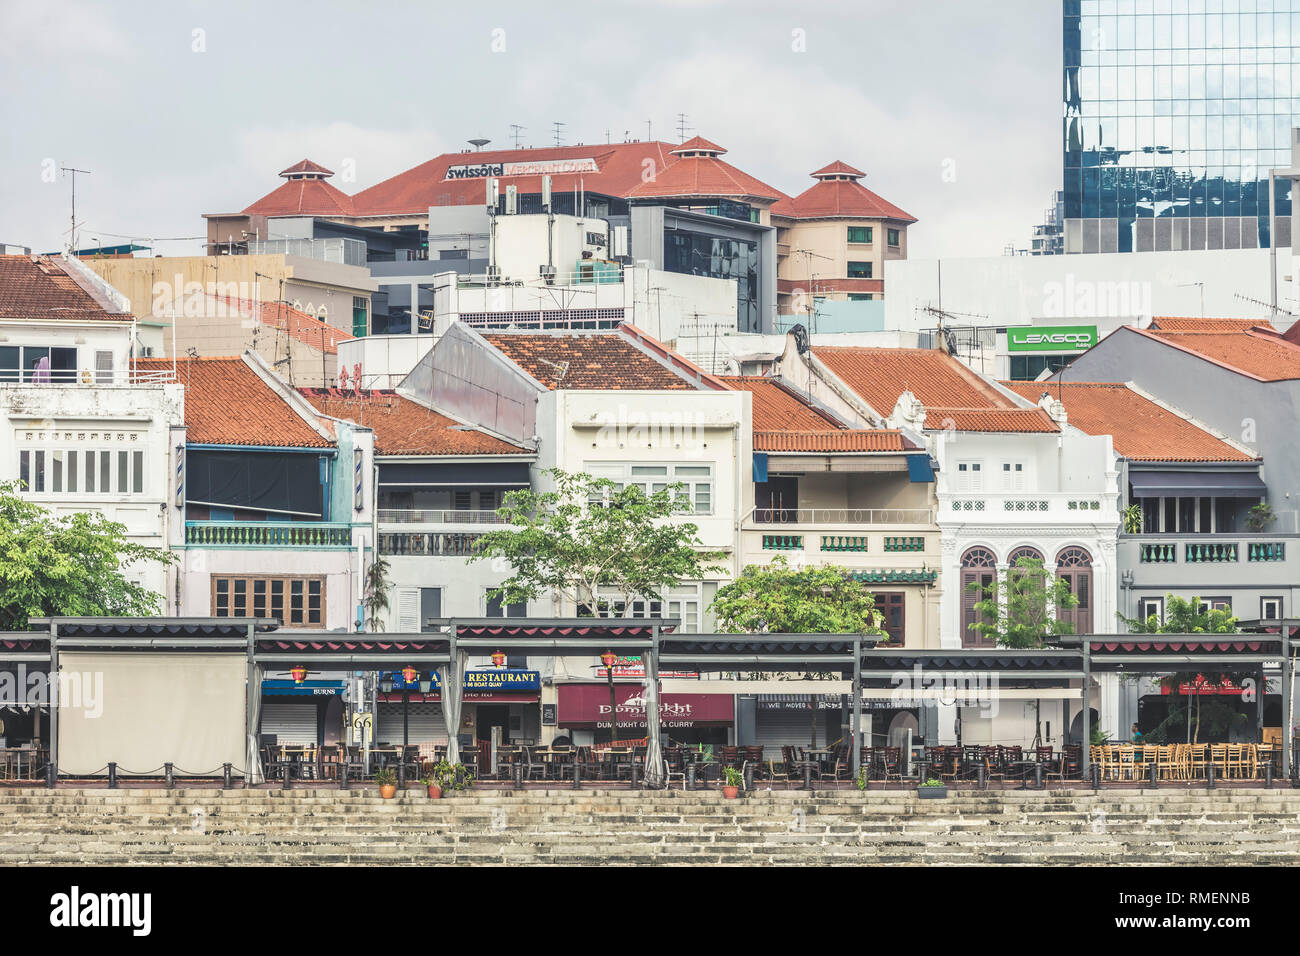 Singapur/Singapur - 10. Februar 2019: Touristenattraktion Boat Quay am Raffles Place shophouse Restaurants und Bars mit kommerziellen Bürogebäude Stockfoto